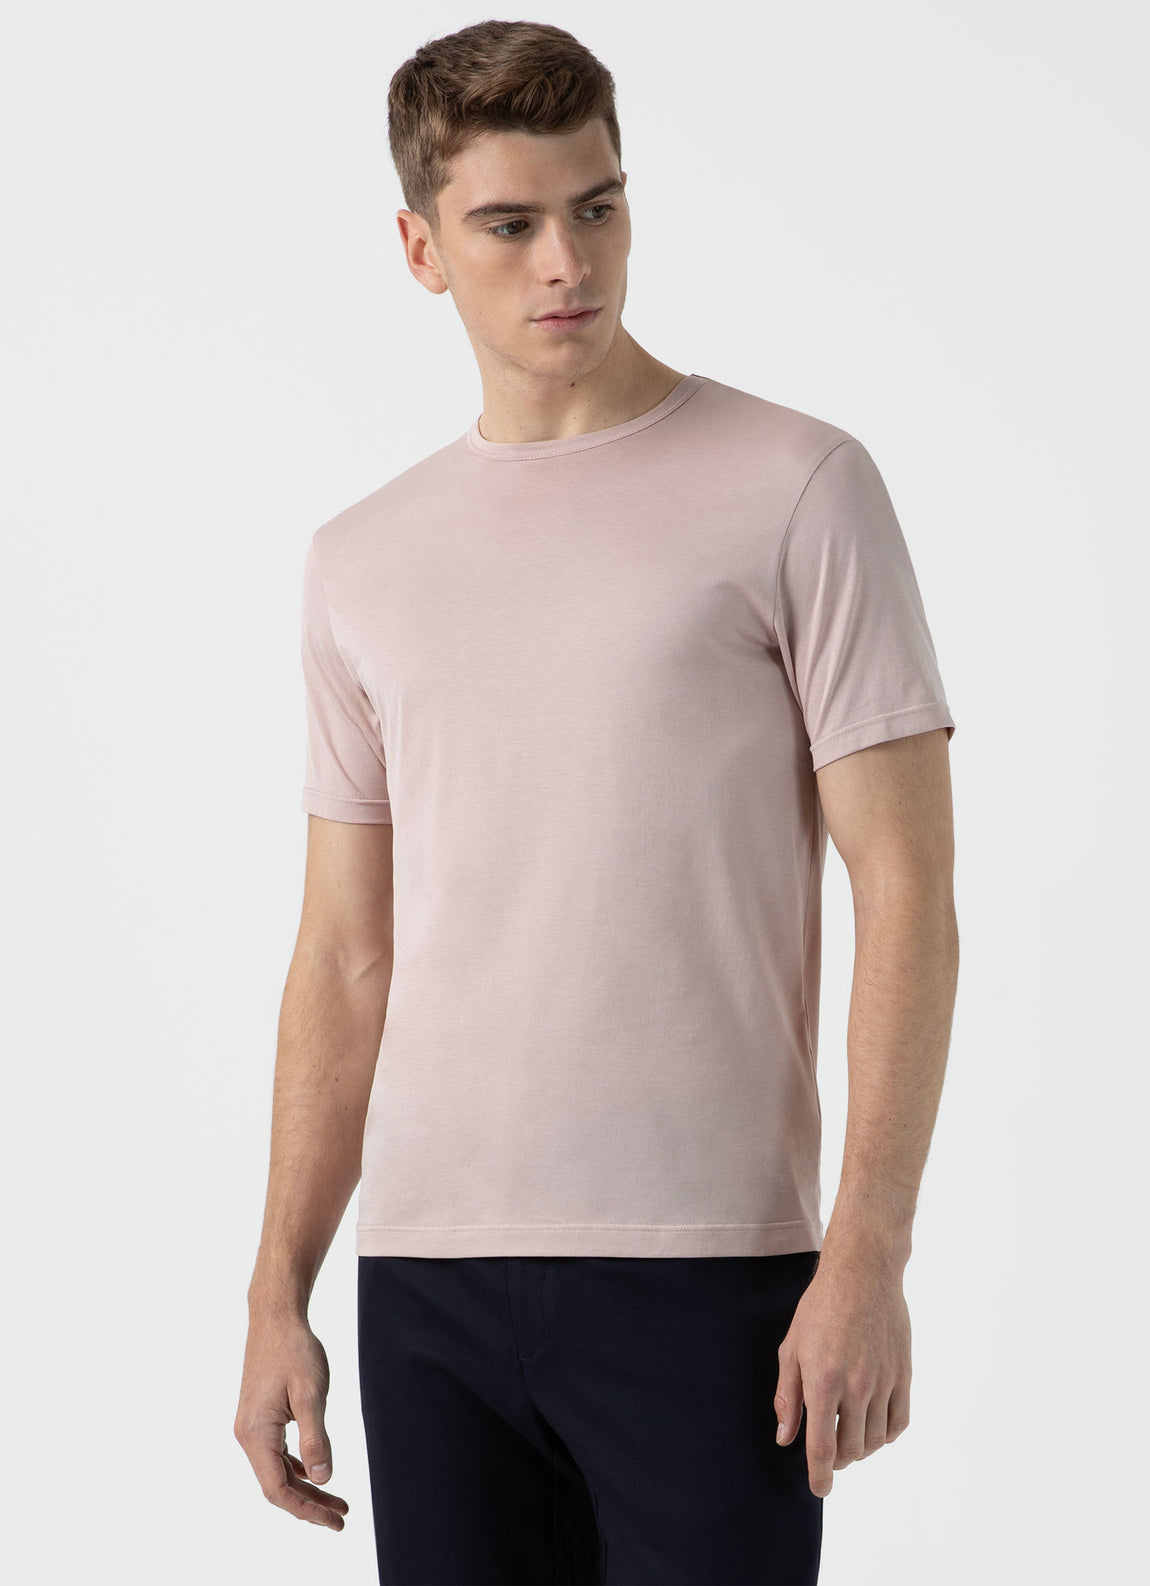 Men's Classic T-shirt in Pale Pink | Sunspel